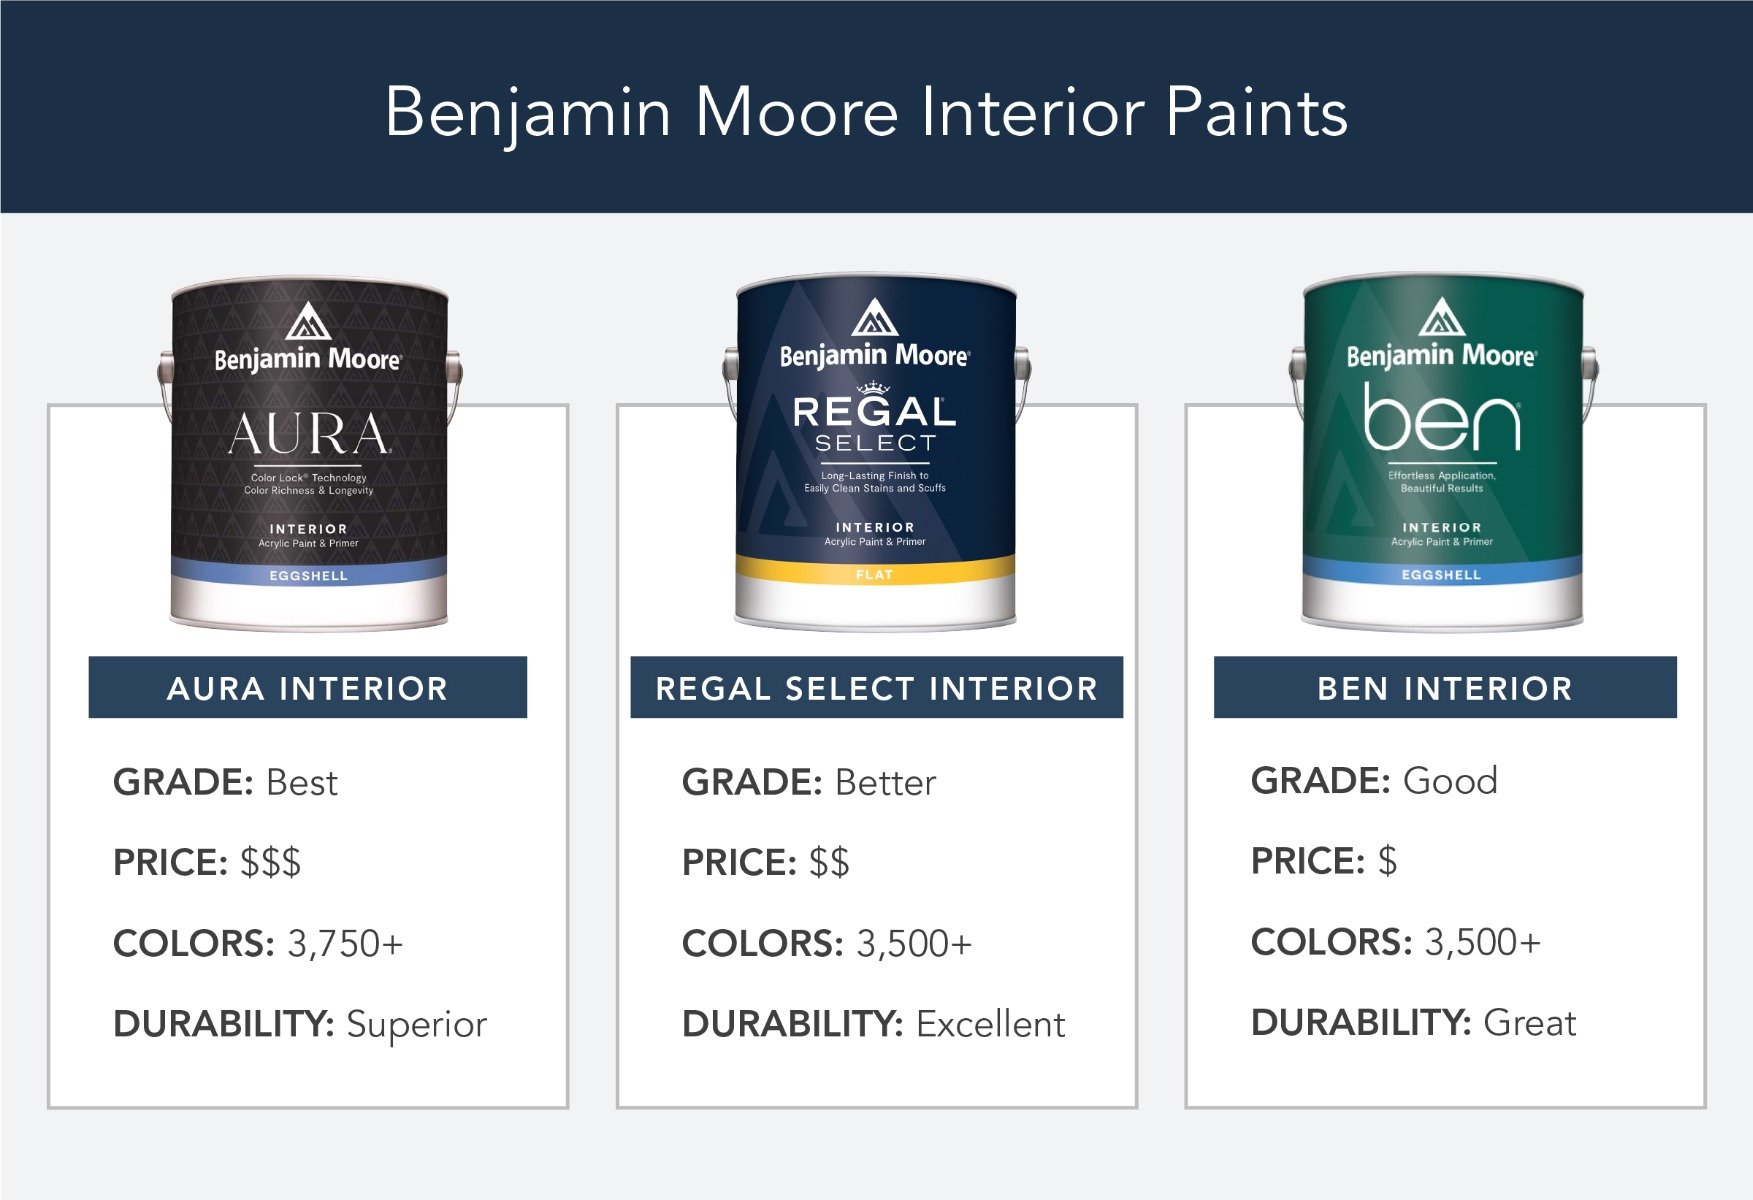 Comparison of Benjamin Moore's top interior paint products, AURA interior, Regal Select Interior, and Ben Interior